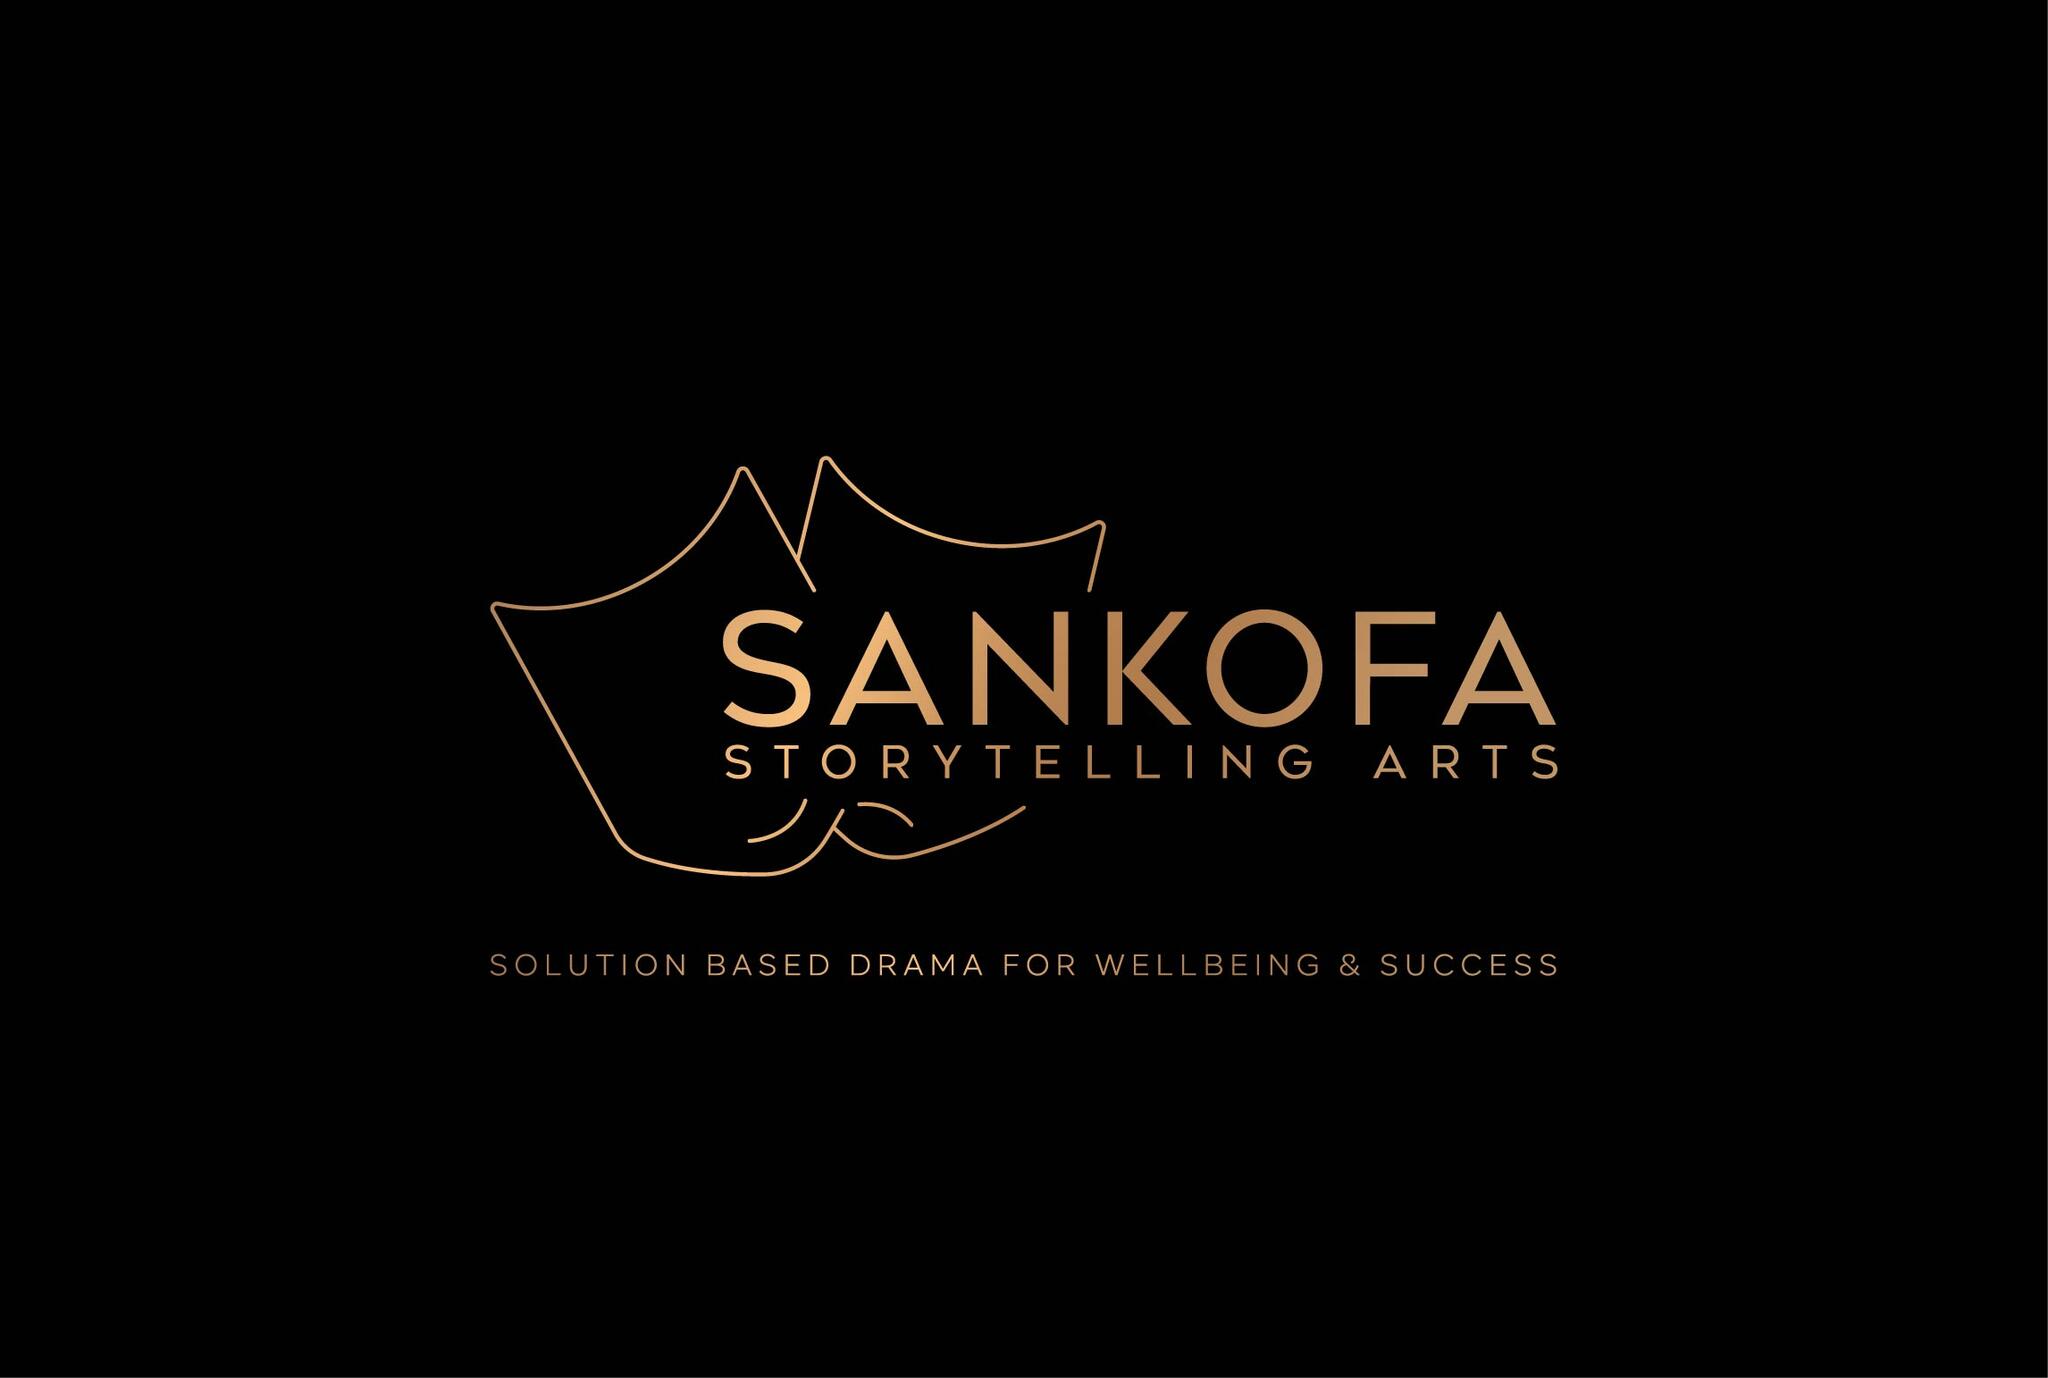 Sankofa Storytelling Arts London Nextdoor 